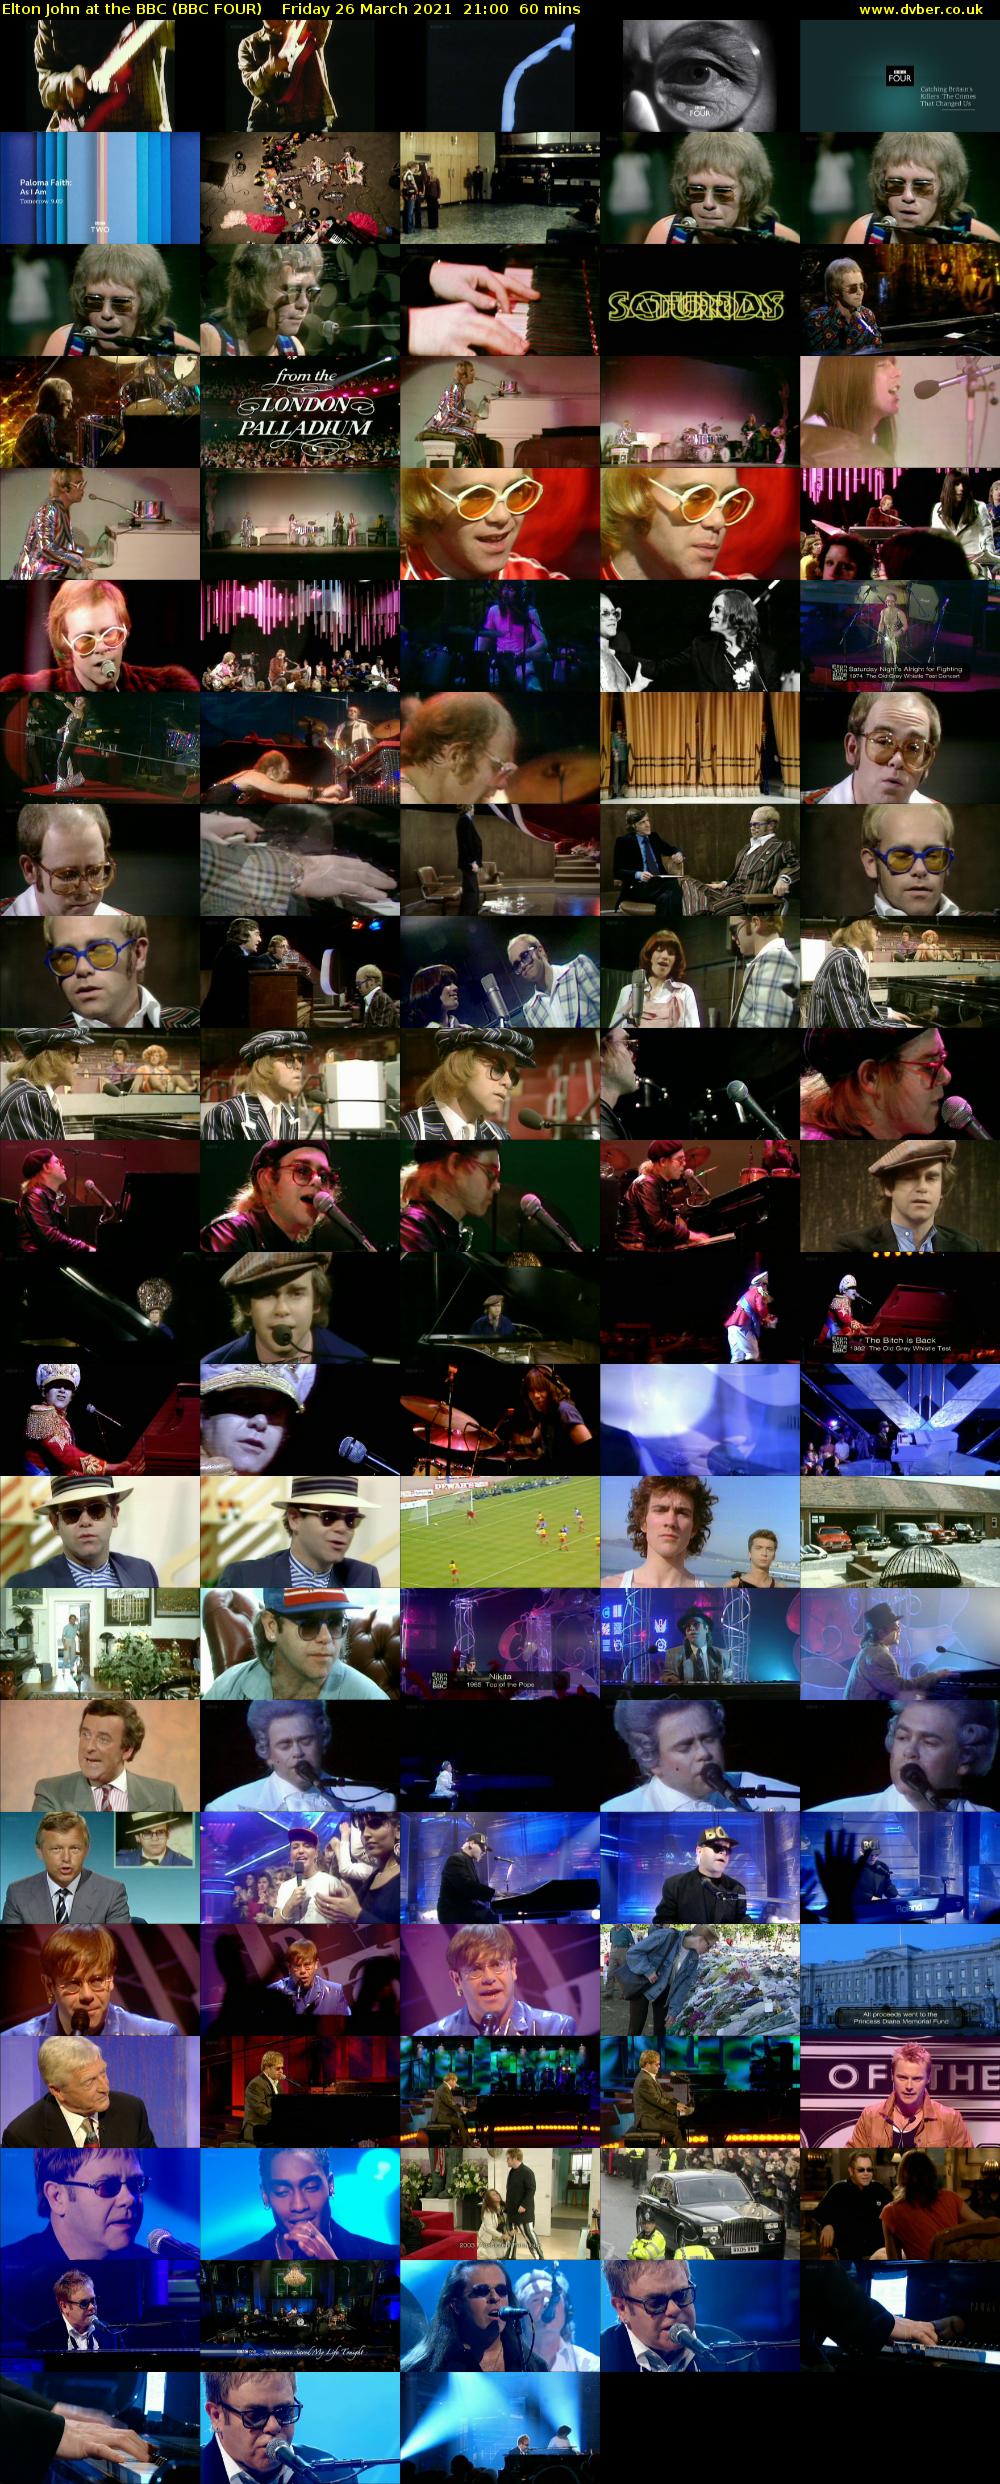 Elton John at the BBC (BBC FOUR) Friday 26 March 2021 21:00 - 22:00